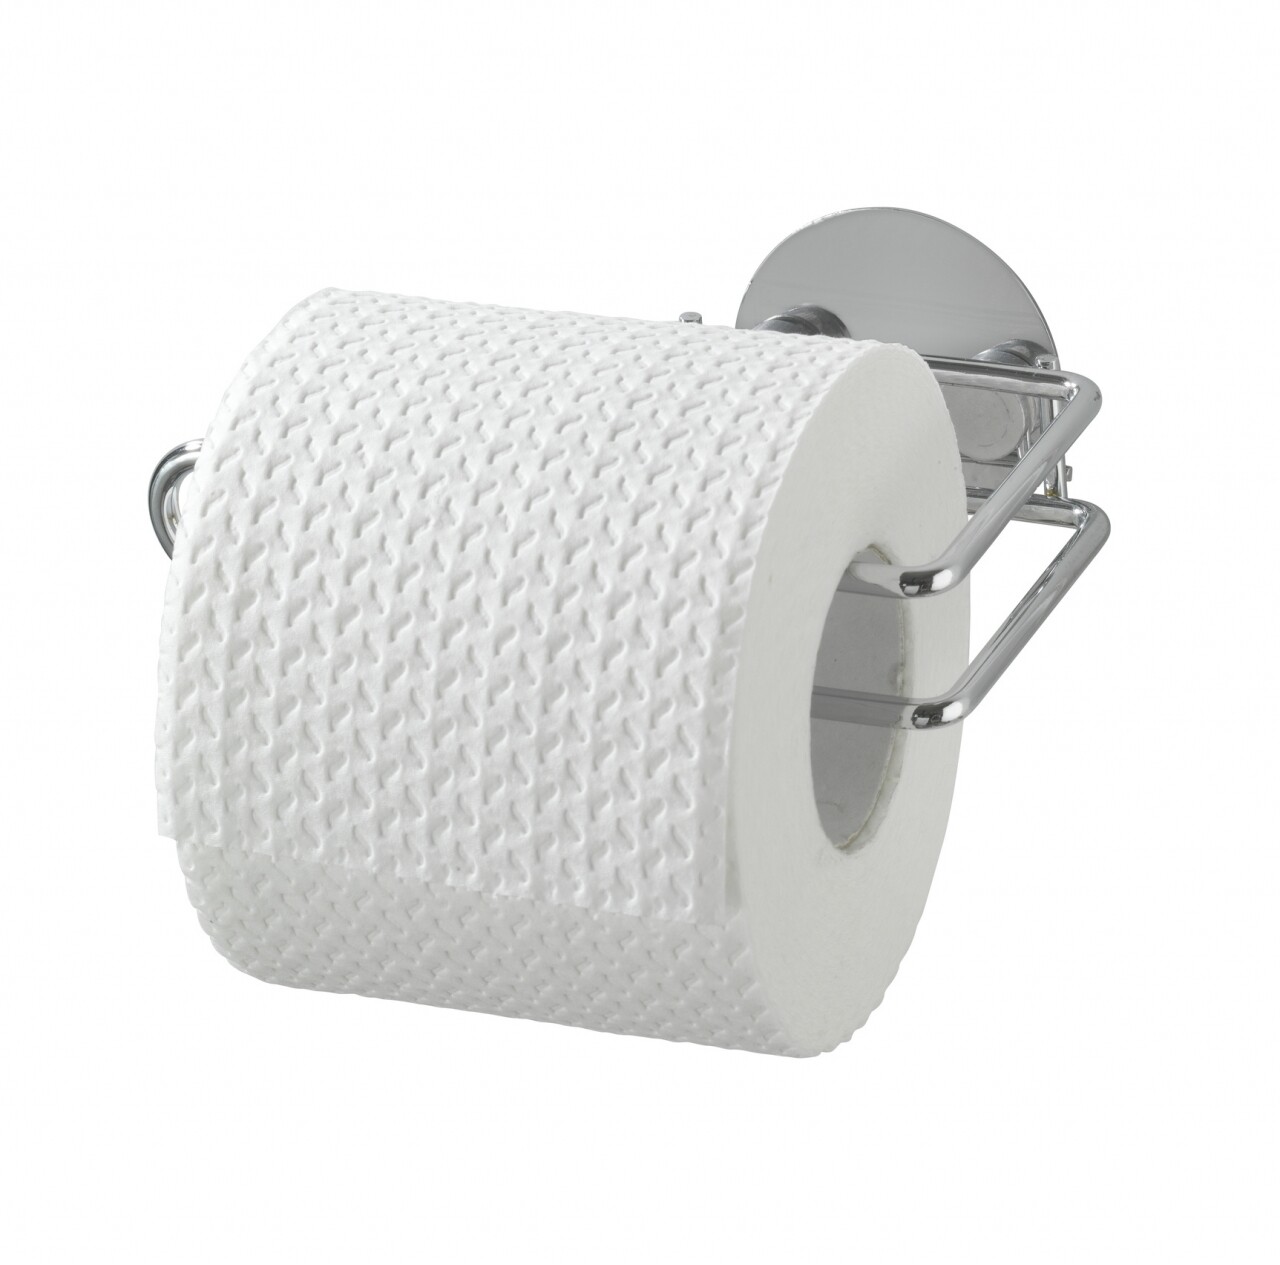 Turbo-Loc fúrásmentes WC-papír tartó, 14 x 9 cm - Wenko